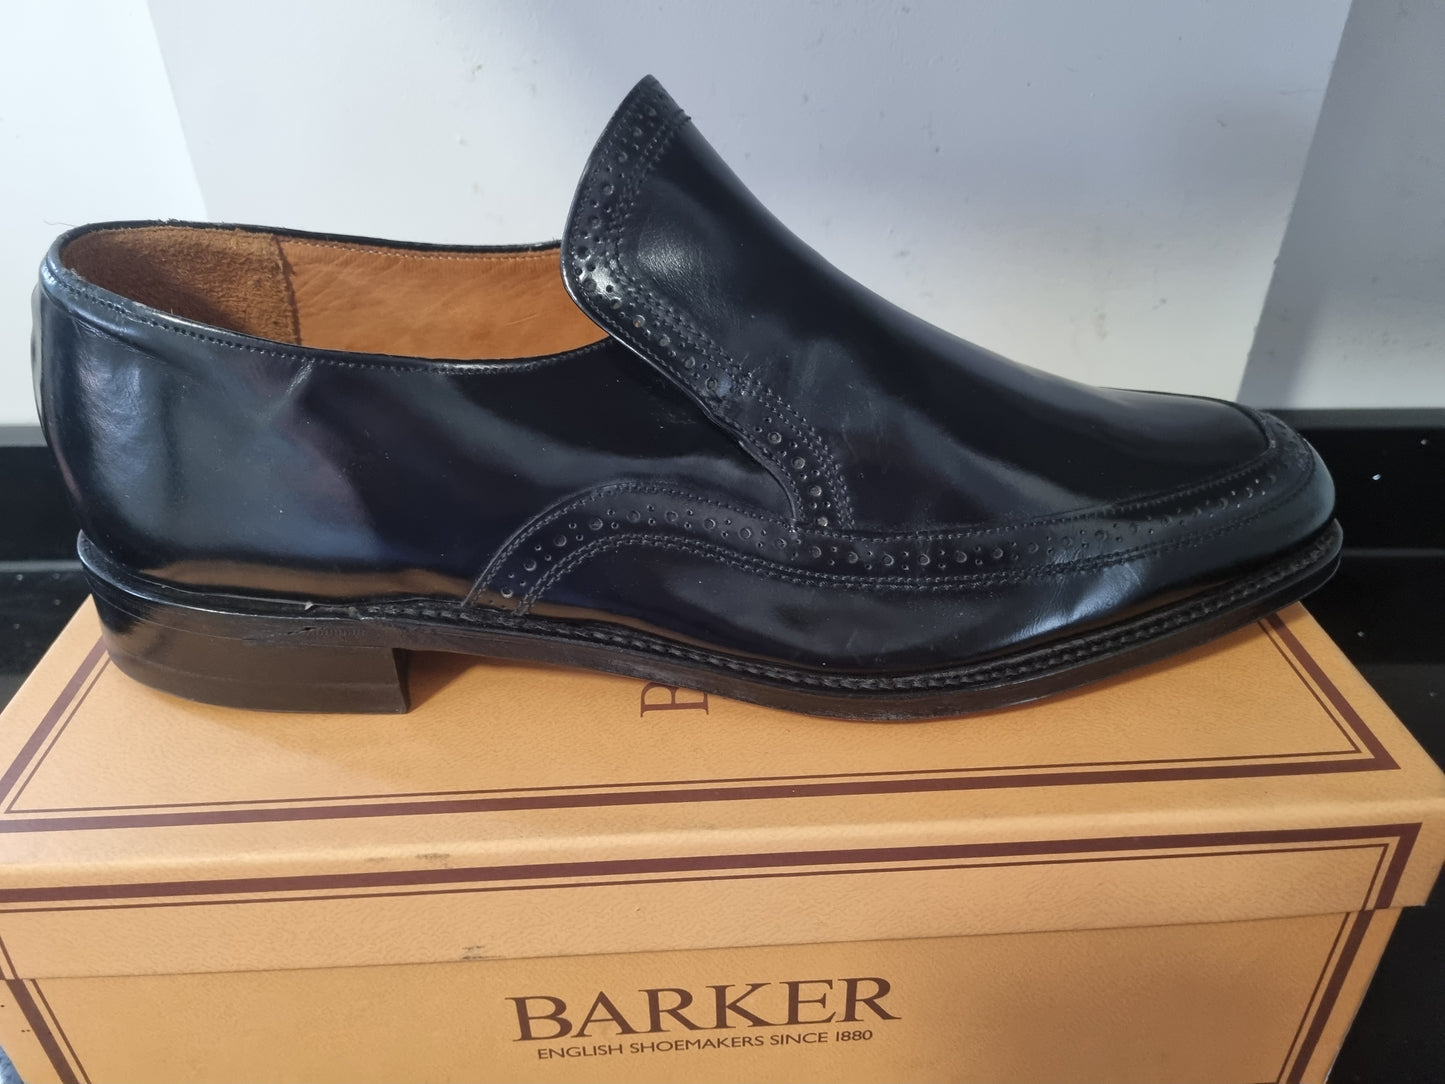 Barker - Hi-Shine Black Leather Casual Slip On